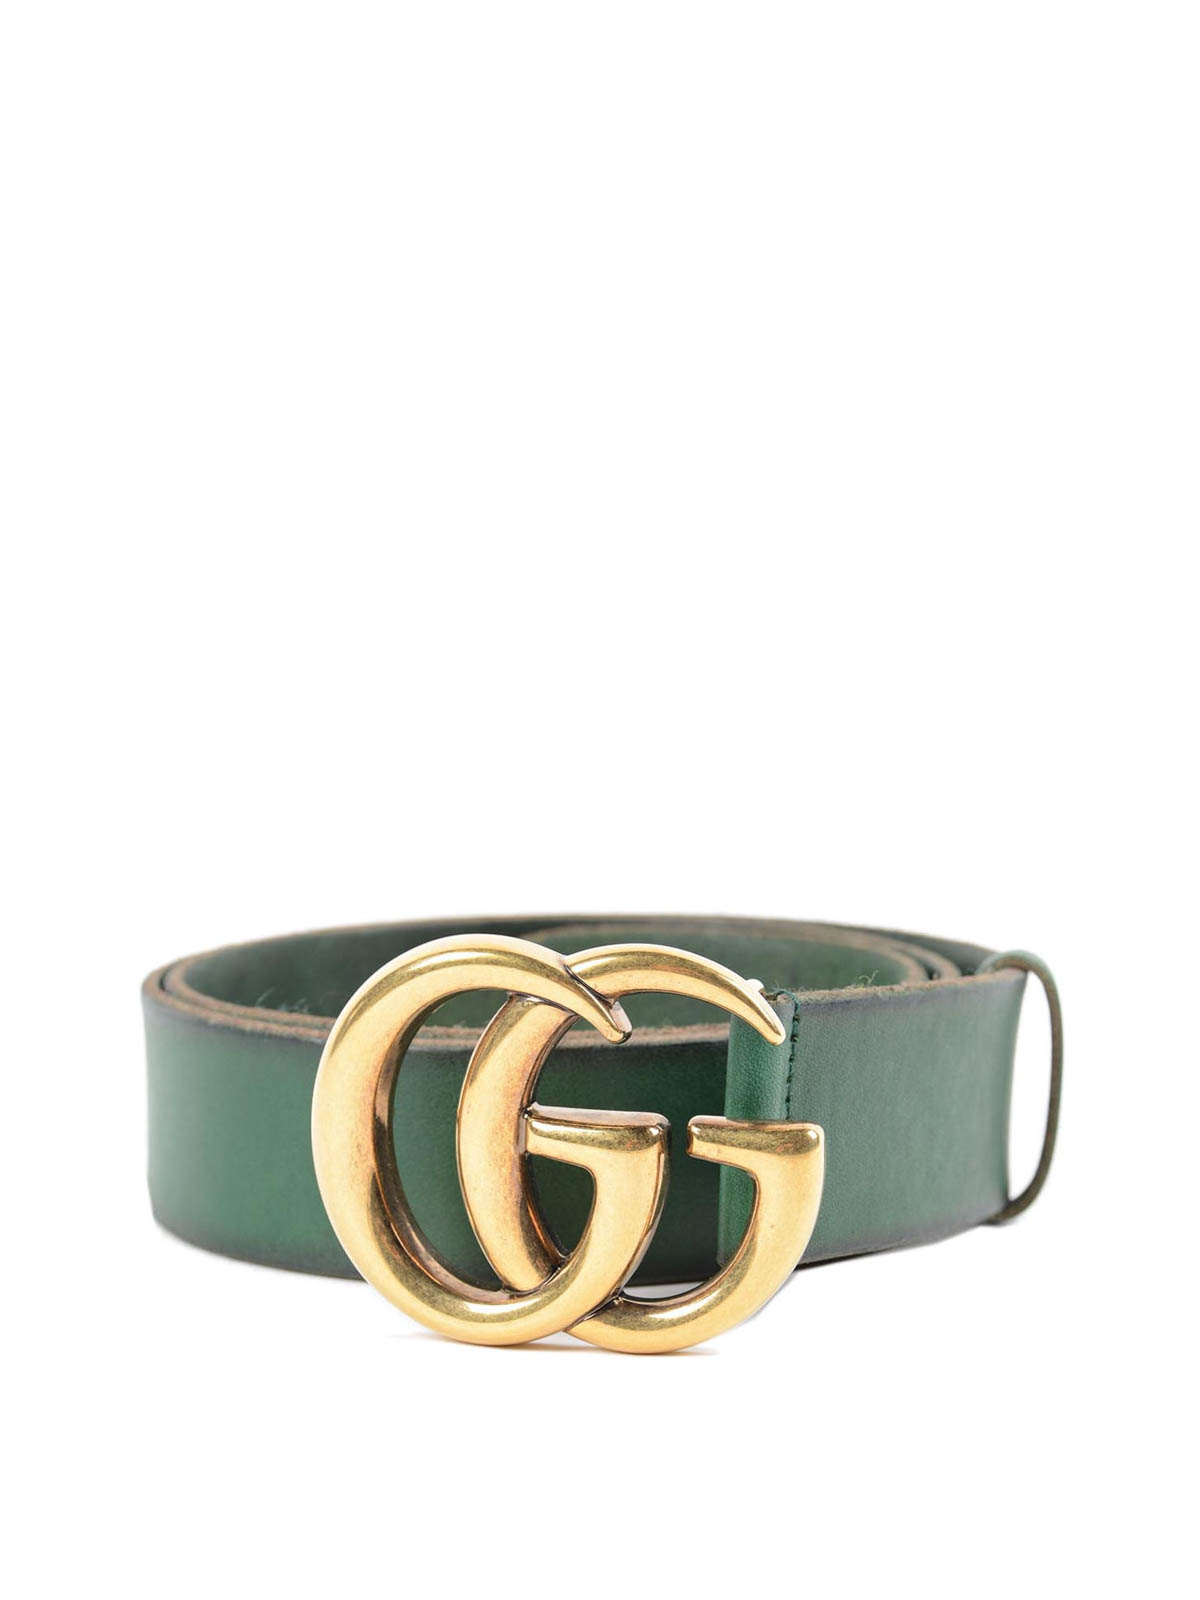 Belts Gucci - Vintage look belt - 406831CVE0T3020 | Shop online at iKRIX